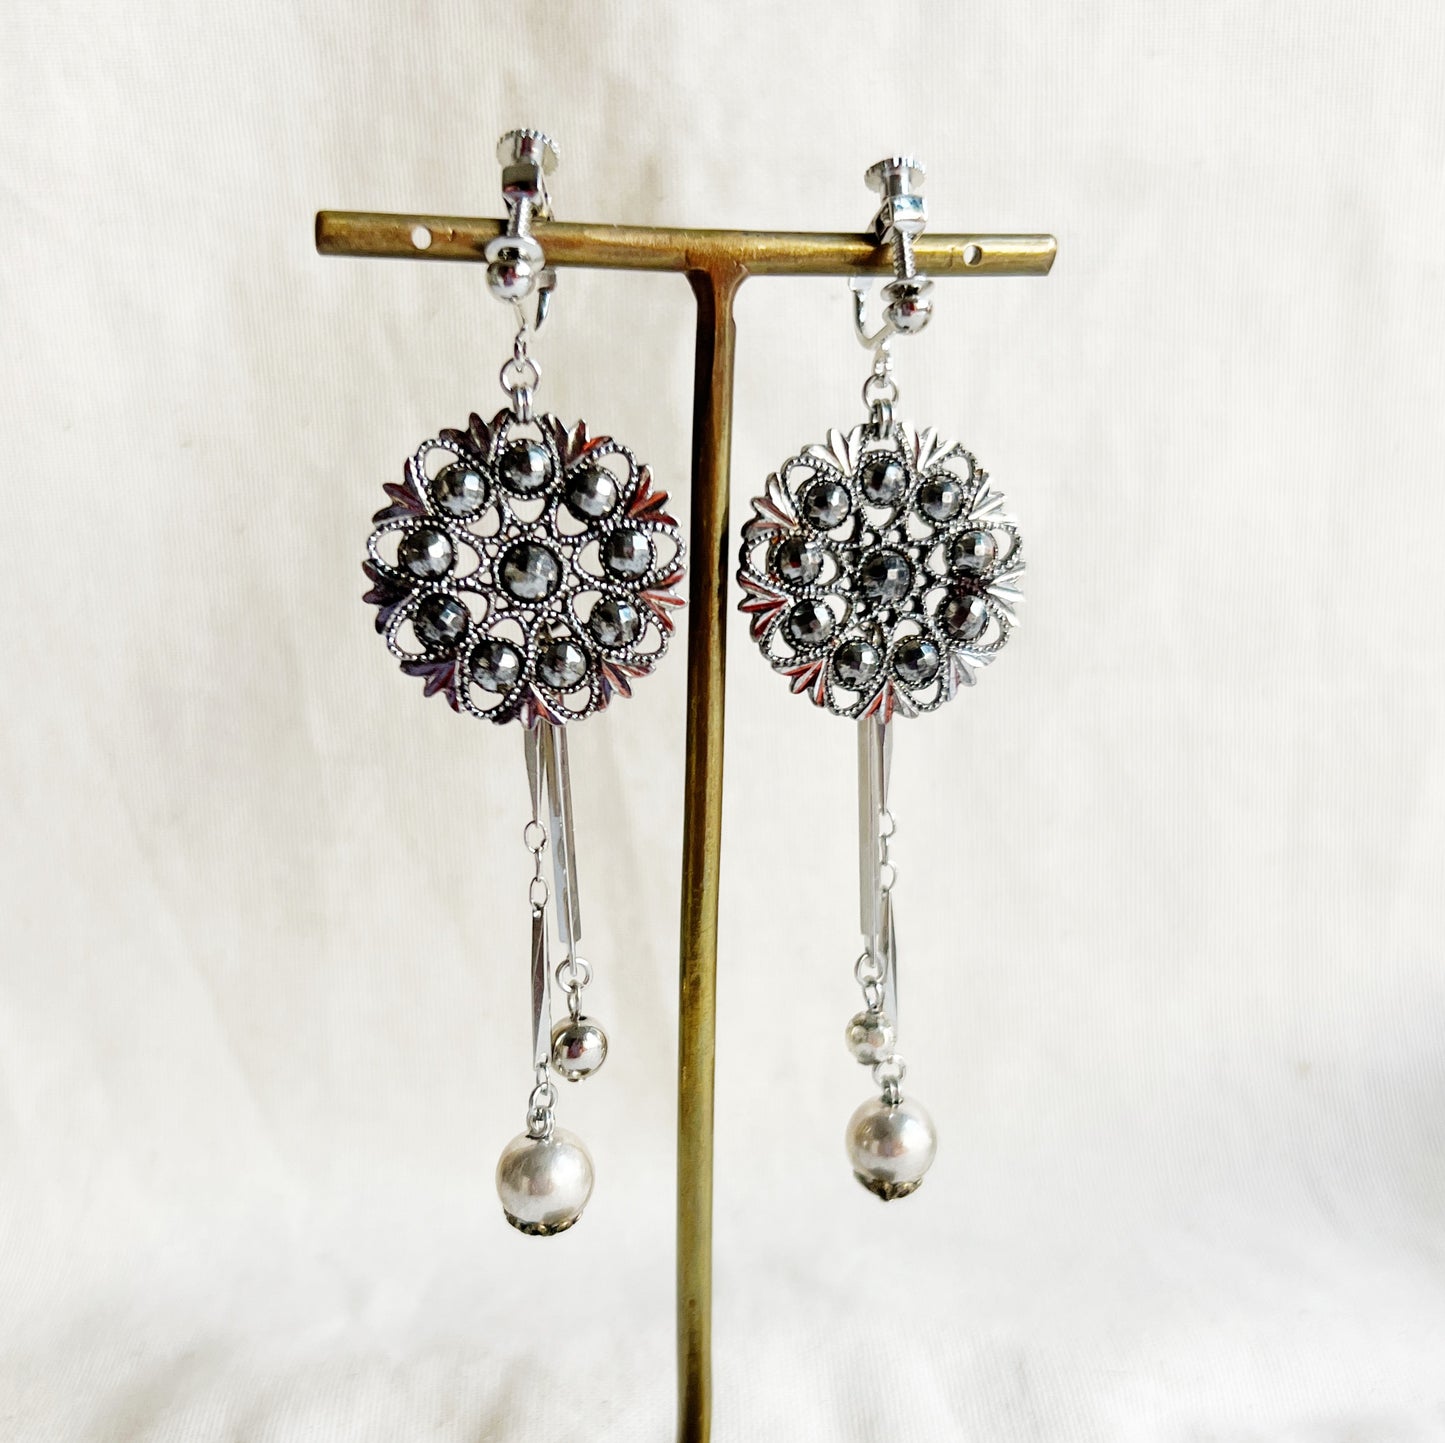 Kaleidoscope earrings